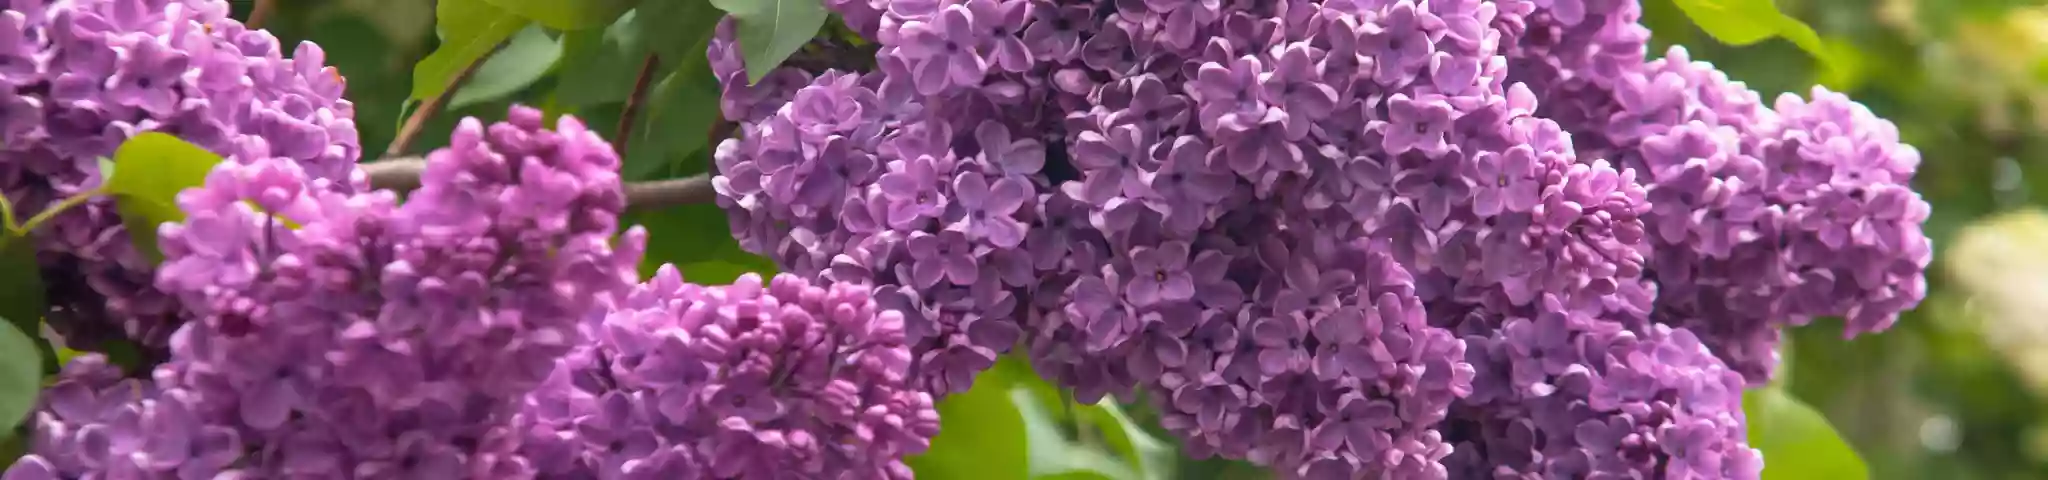 Lilac Flowers In garden